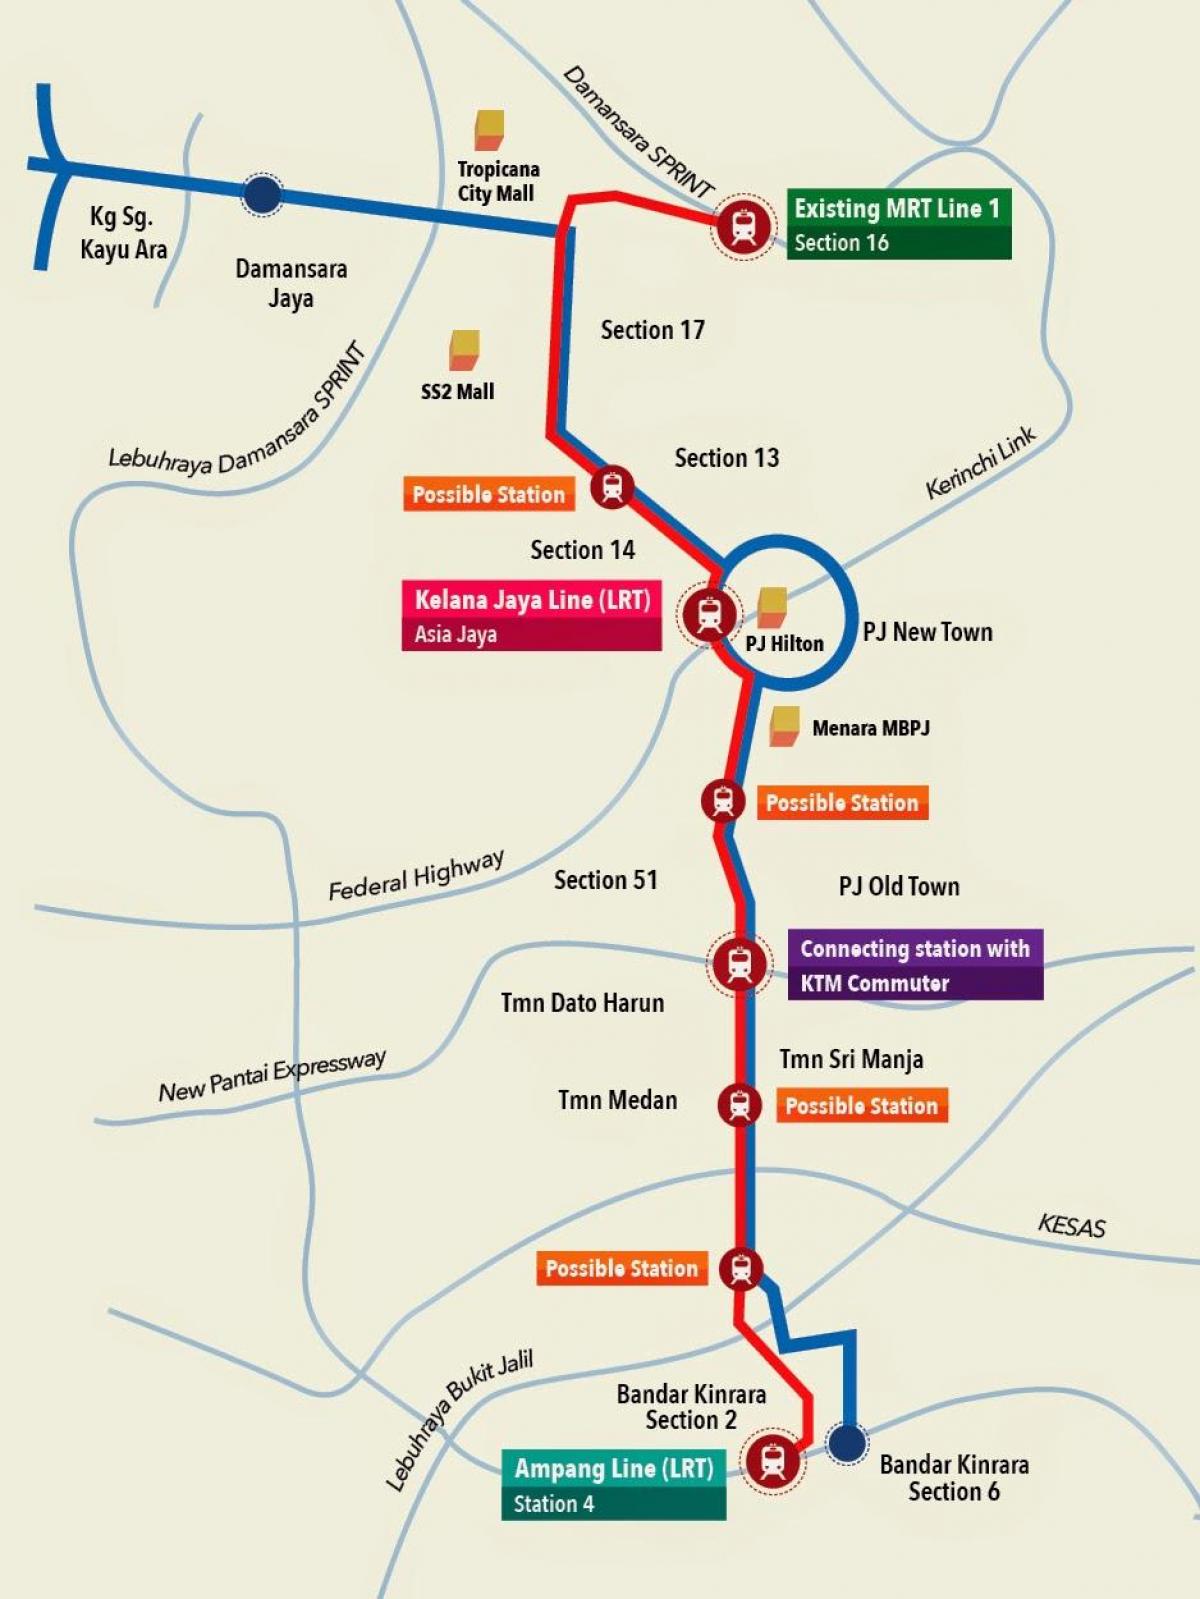 келана Jaya stacji LRT mapie